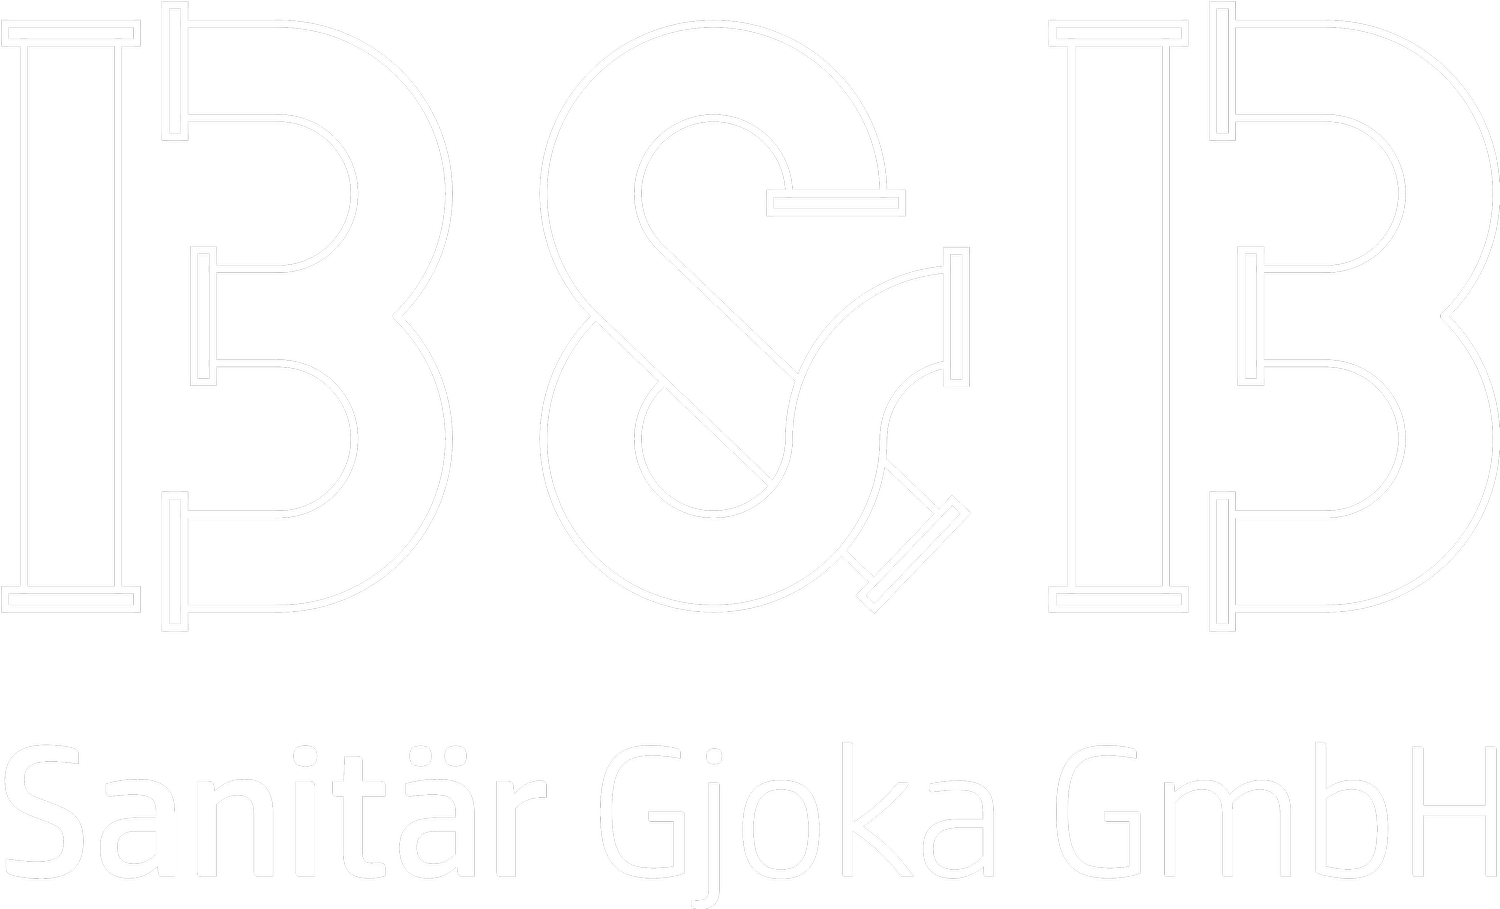 B &amp; B Sanitär Gjoka GmbH - Ihr Sanitärexperte in Birmensdorf